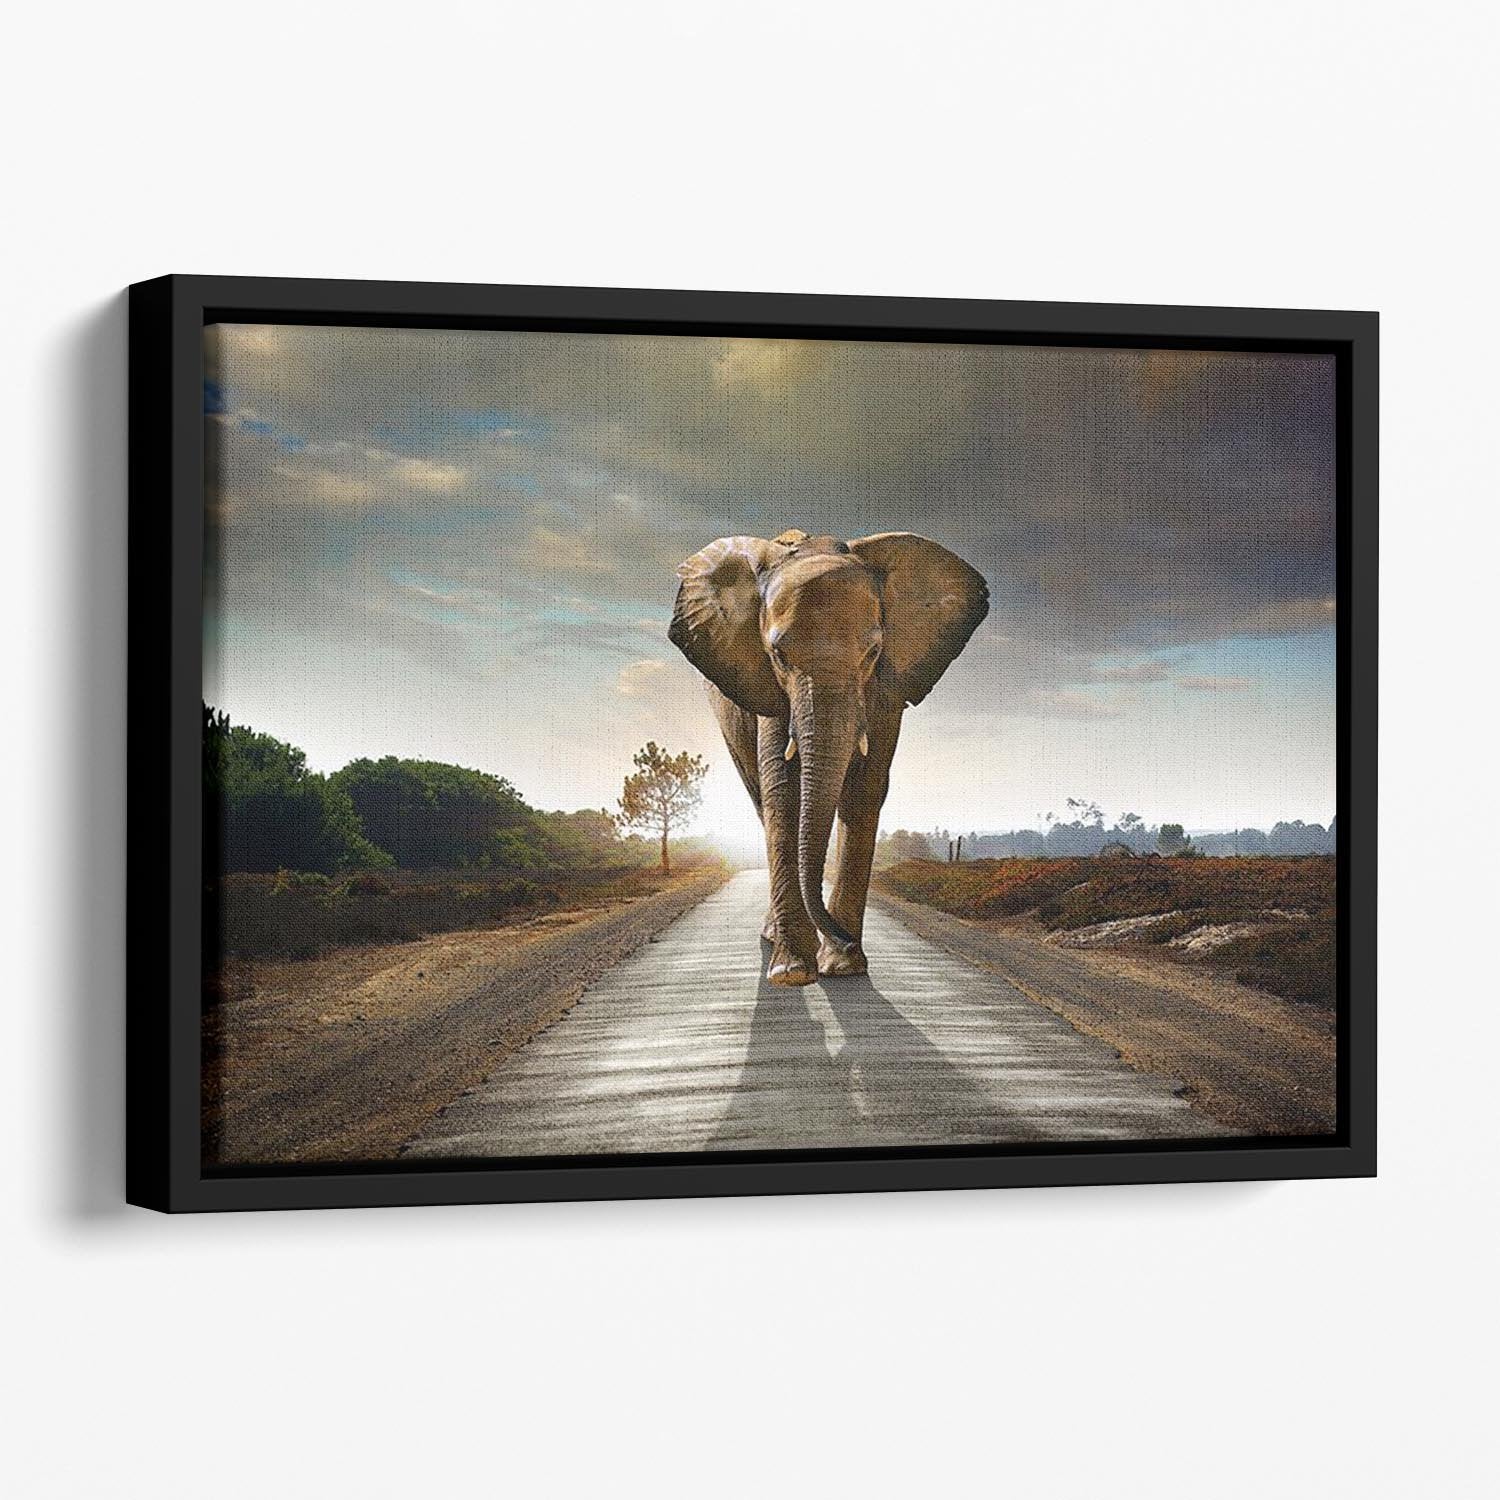 Single elephant walking in a road Floating Framed Canvas - Canvas Art Rocks - 1